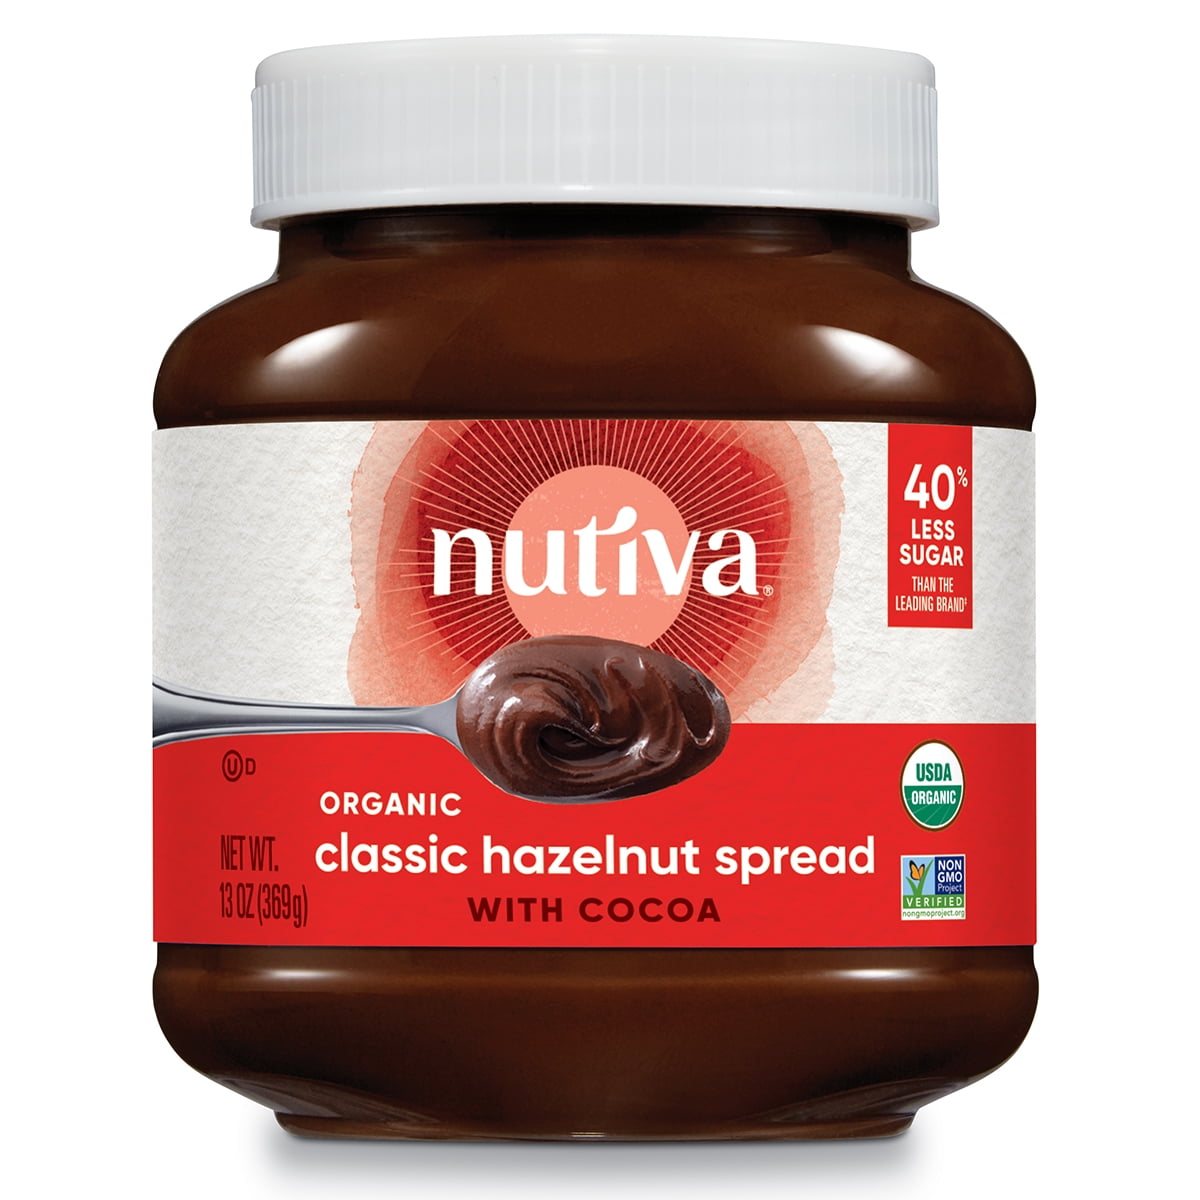 Nutiva Organic Vegan Hazelnut Spread Classic Chocolate, 13 oz